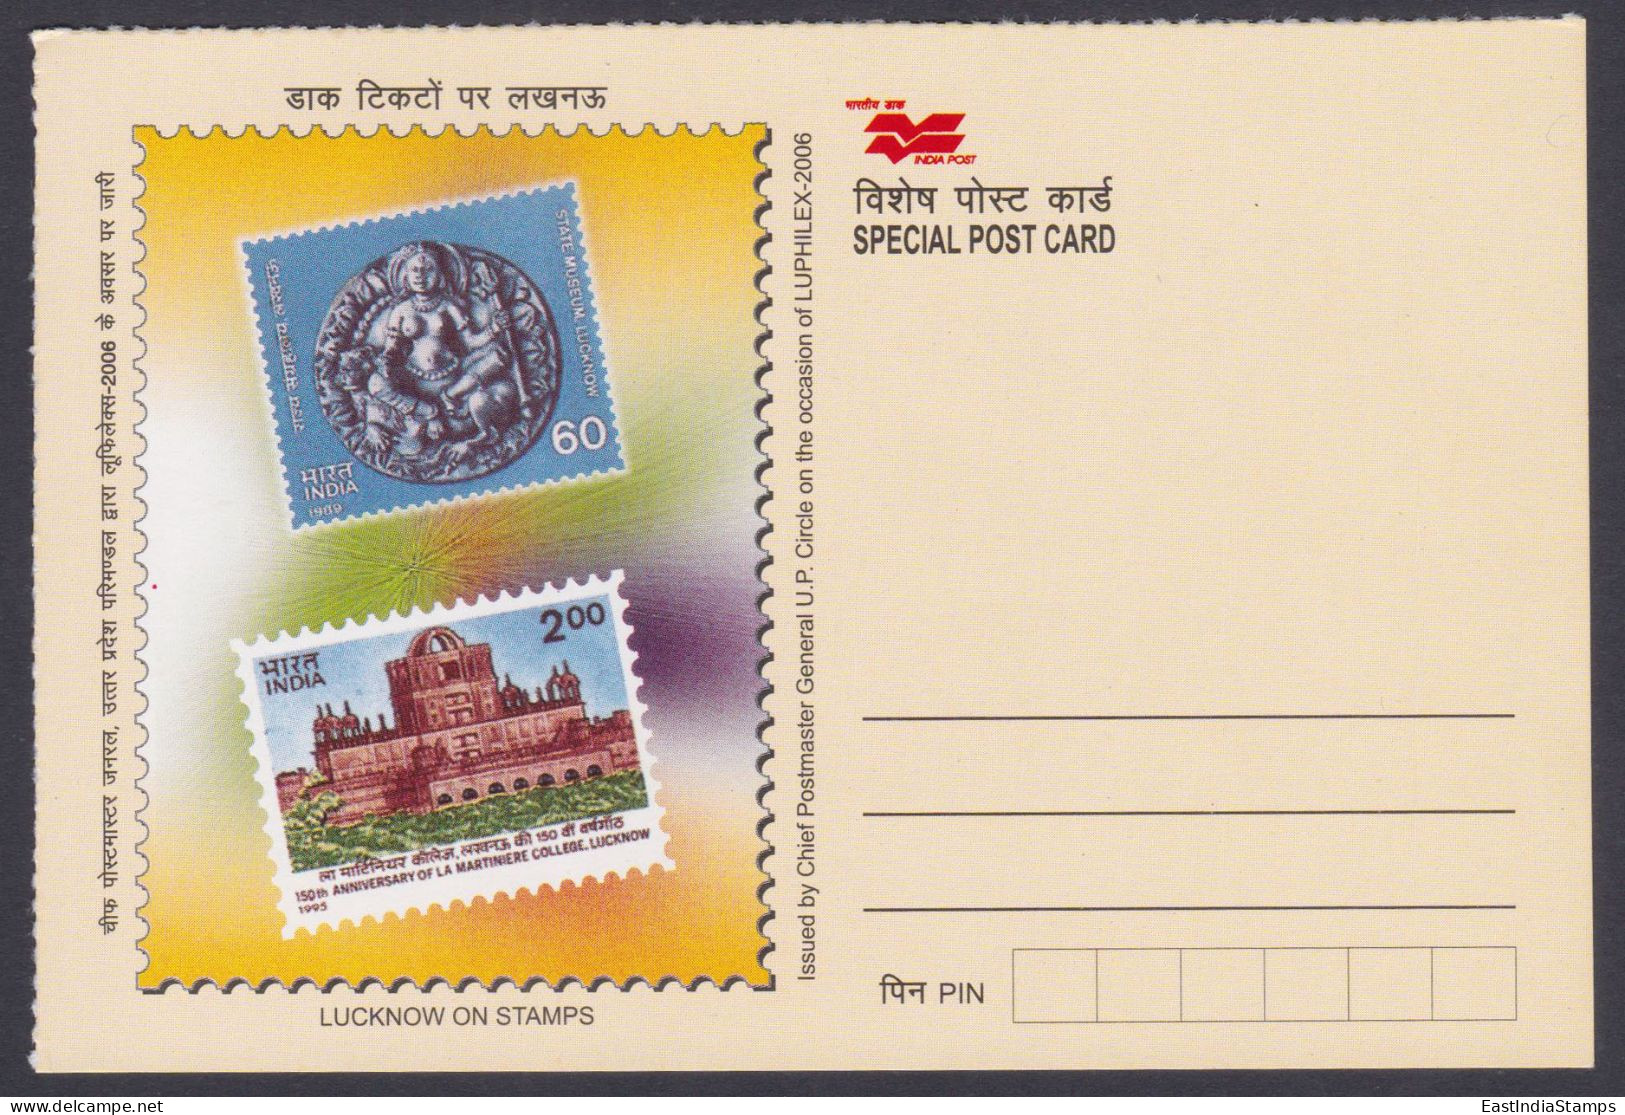 Inde India 2006 Mint Postcard State Museum, Sculpture, La Martinere College, Lucknow, UPhilex Philatelic Exhibition - India